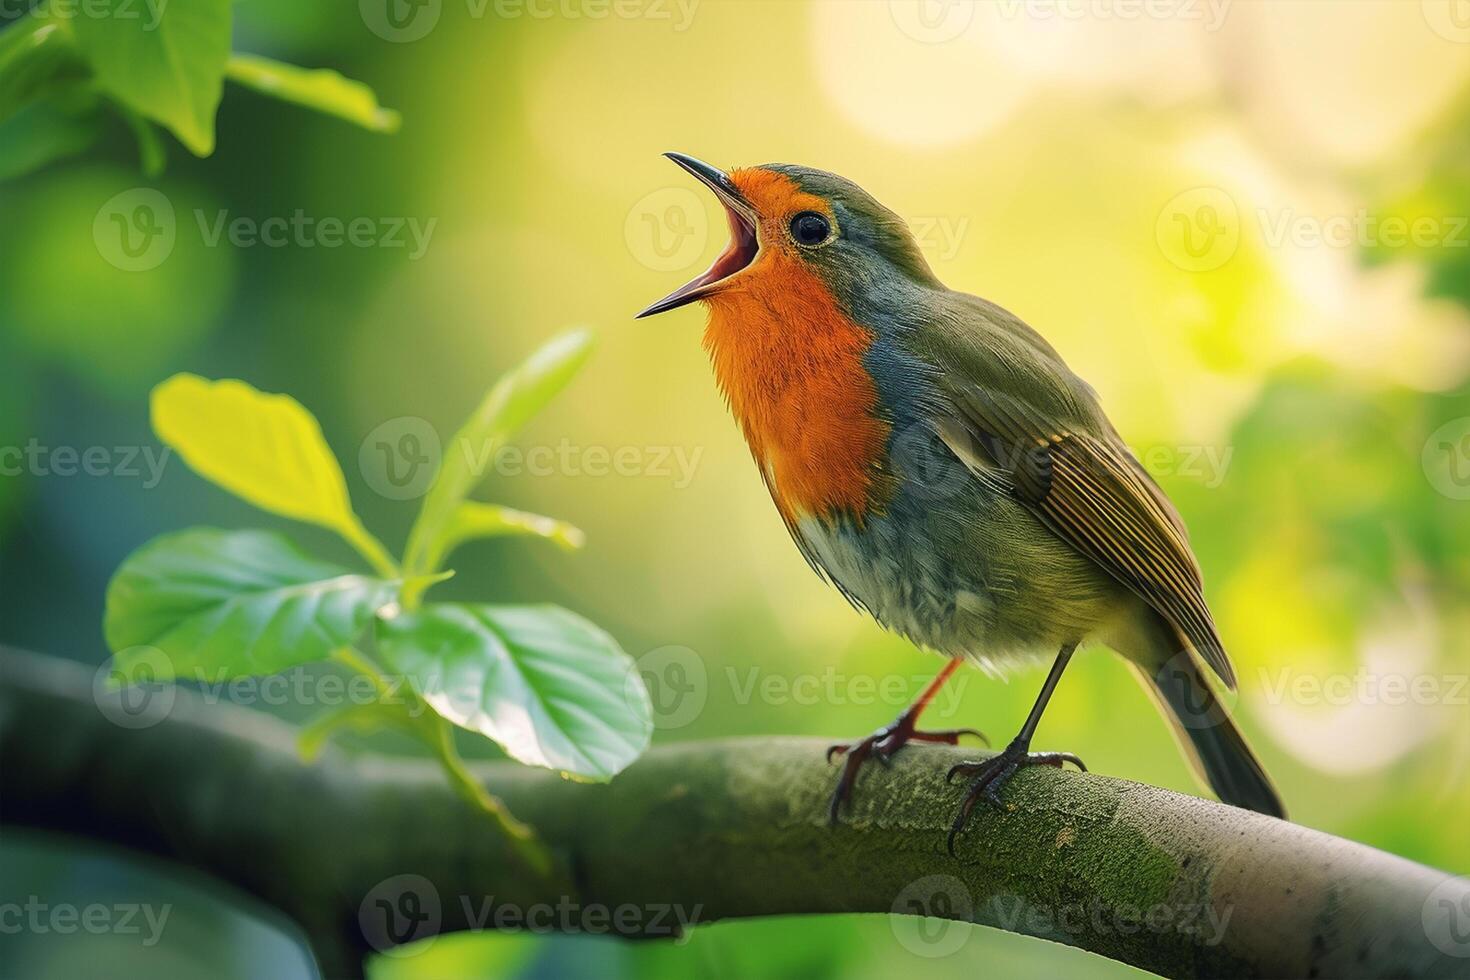 ai generado contento pájaro cantando, mundo fauna silvestre día foto